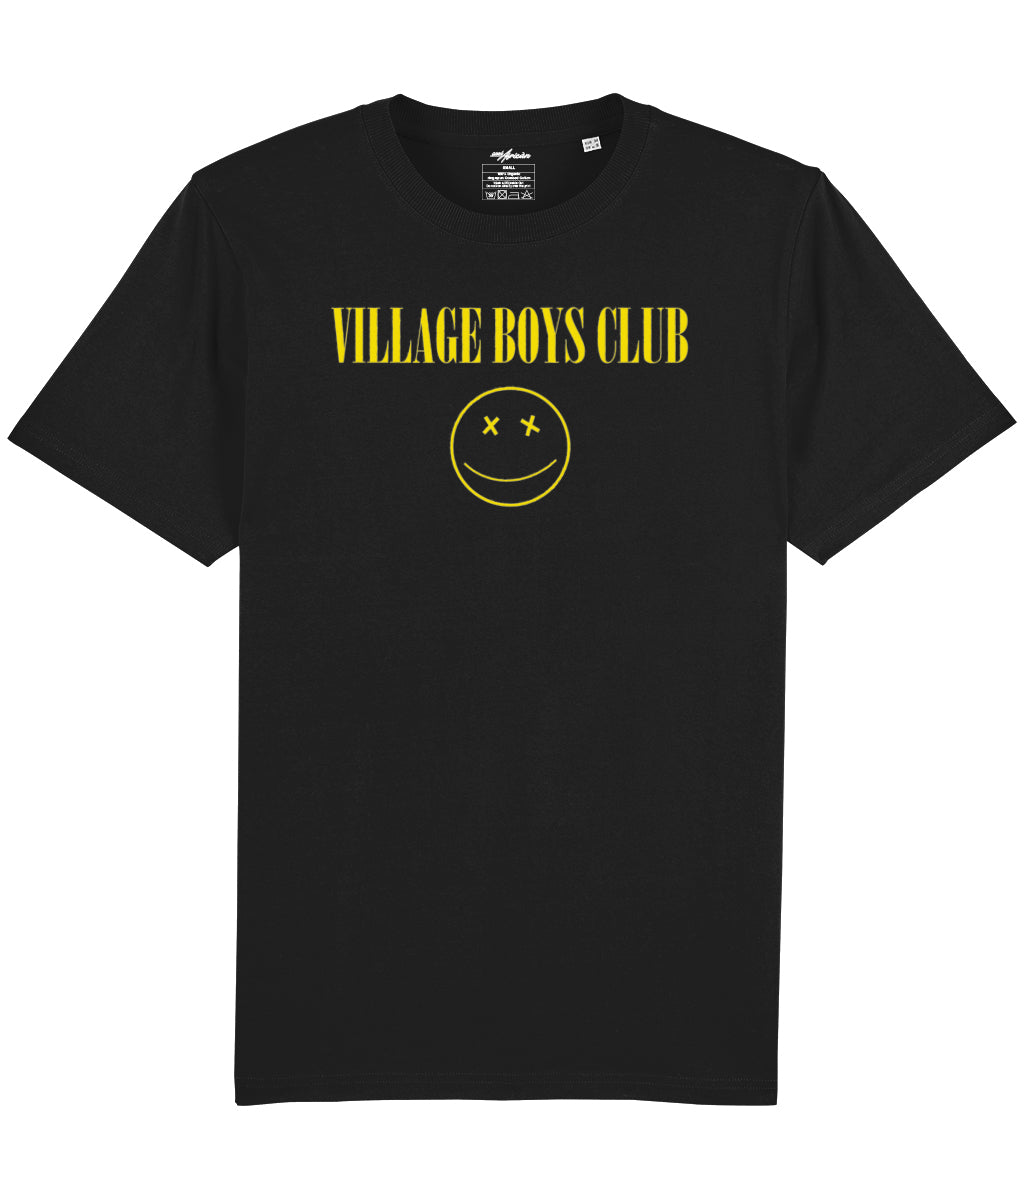 VillageBoysClub